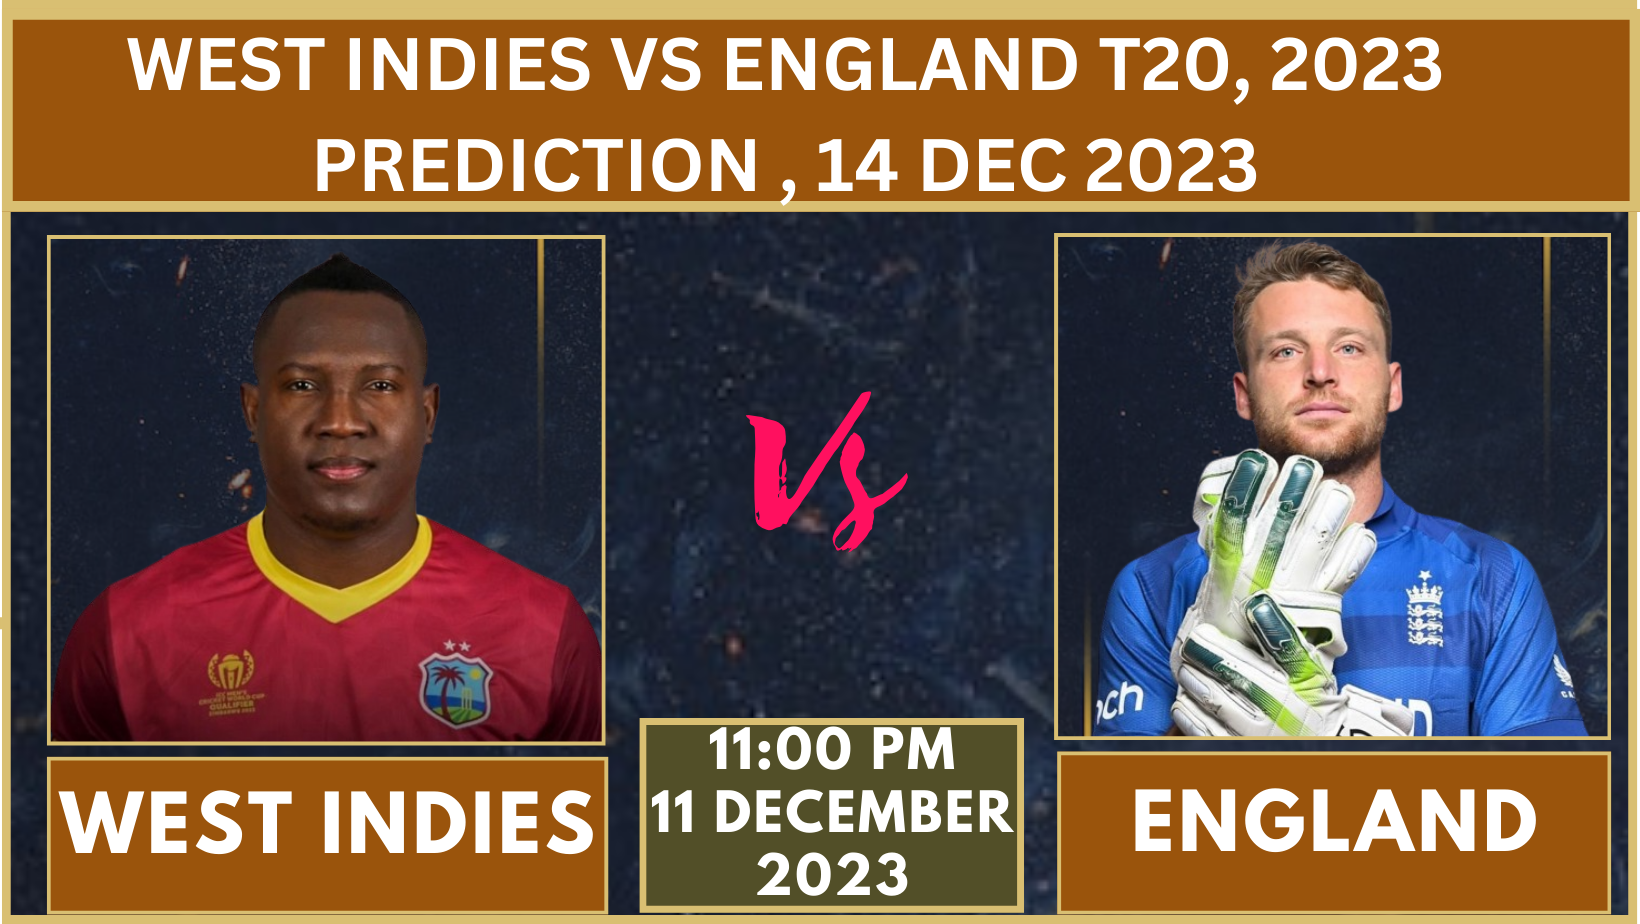 WEST INDIES VS ENGLAND T20